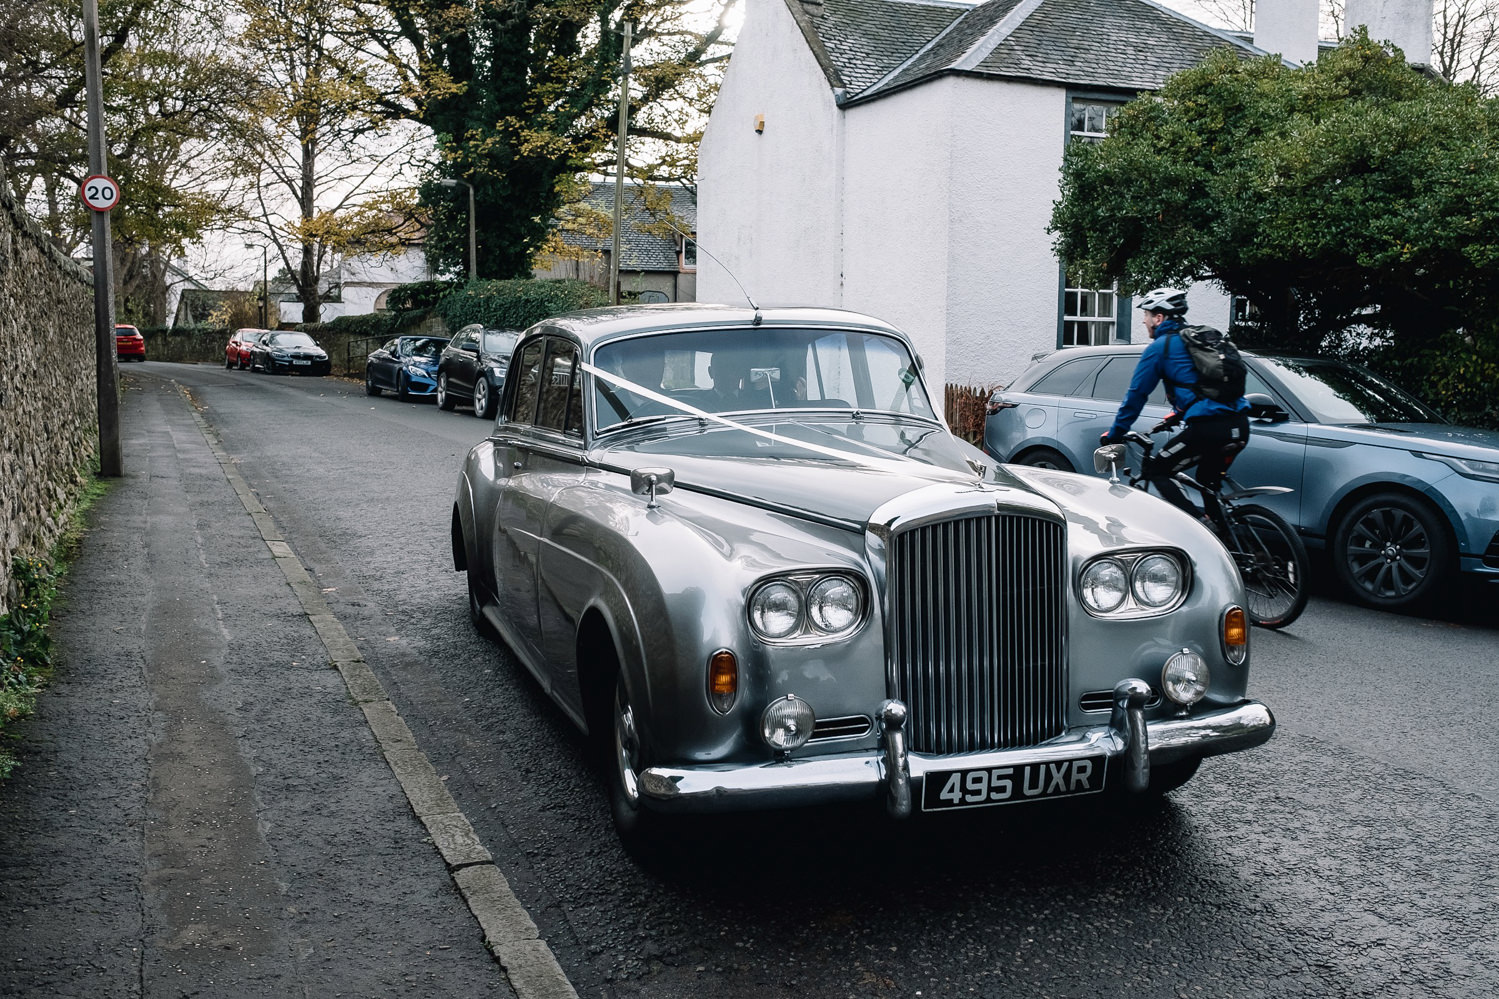  Classic Bentley arrives with bride 